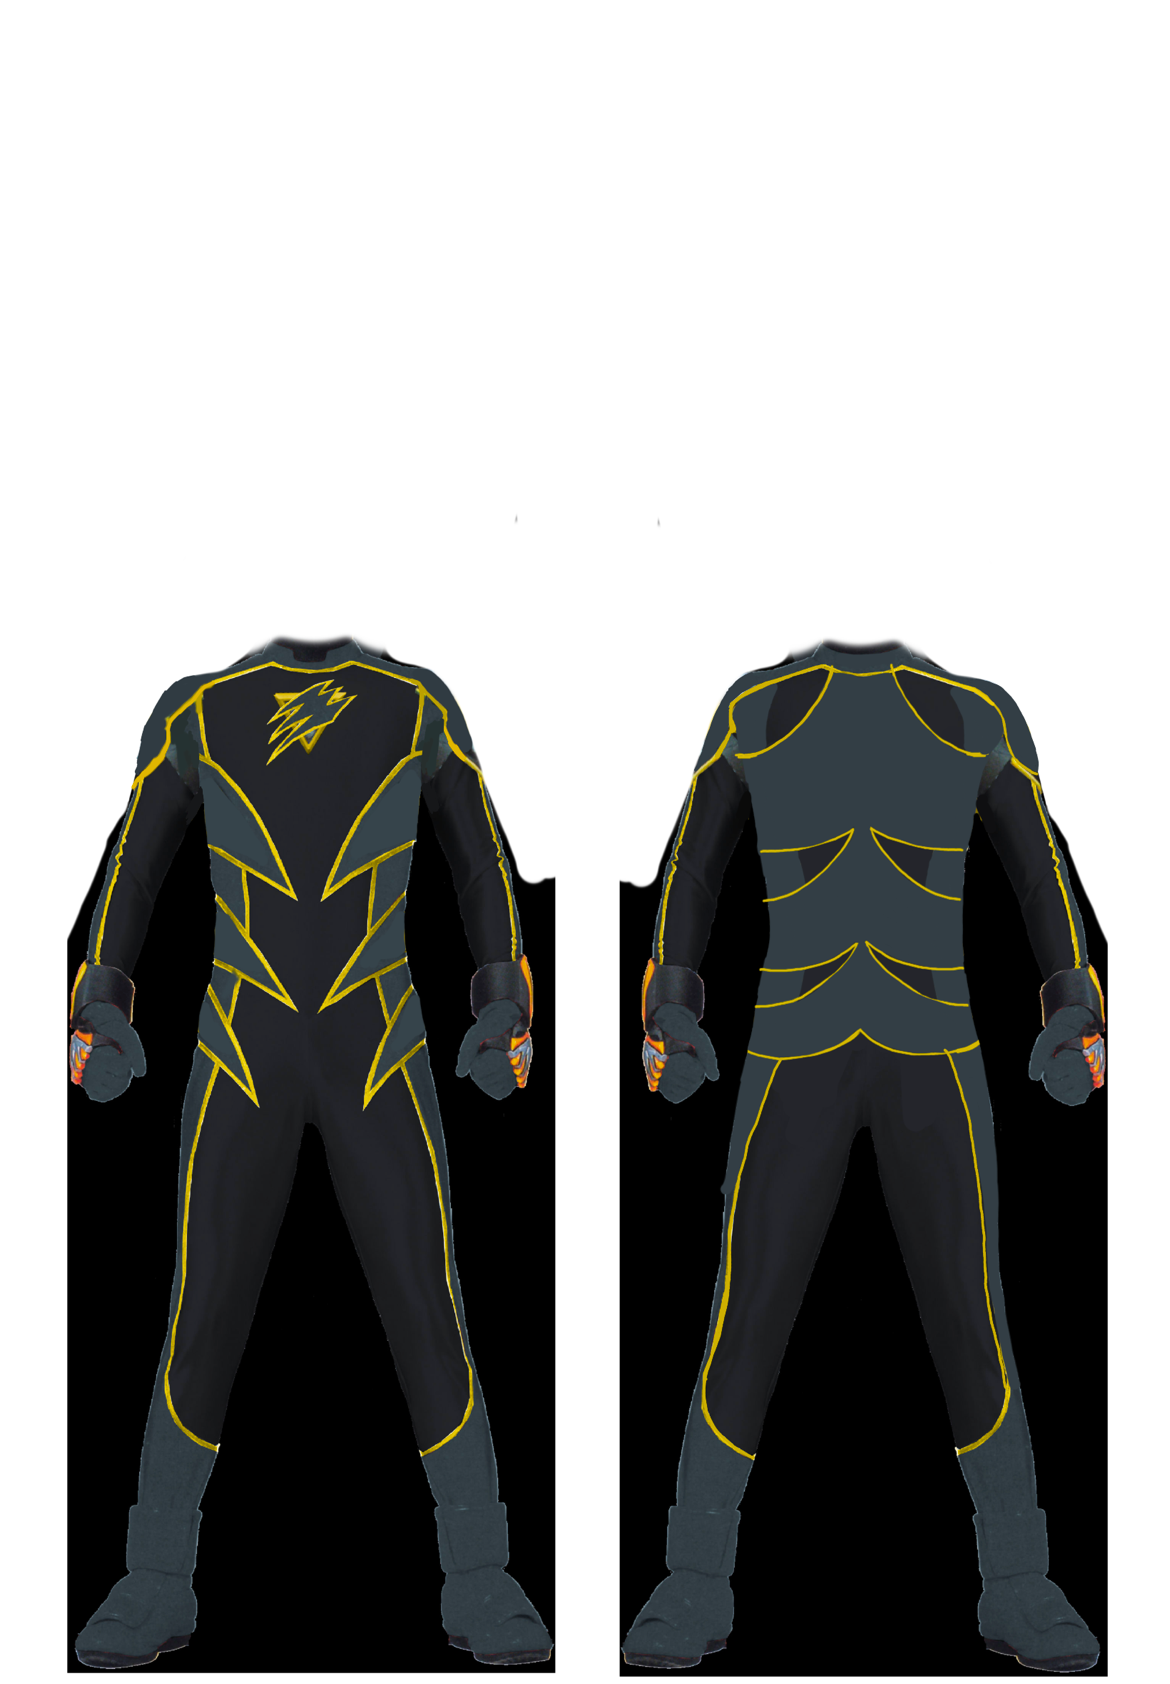 Power ranger Quantum continuum ranger cosplay outfit